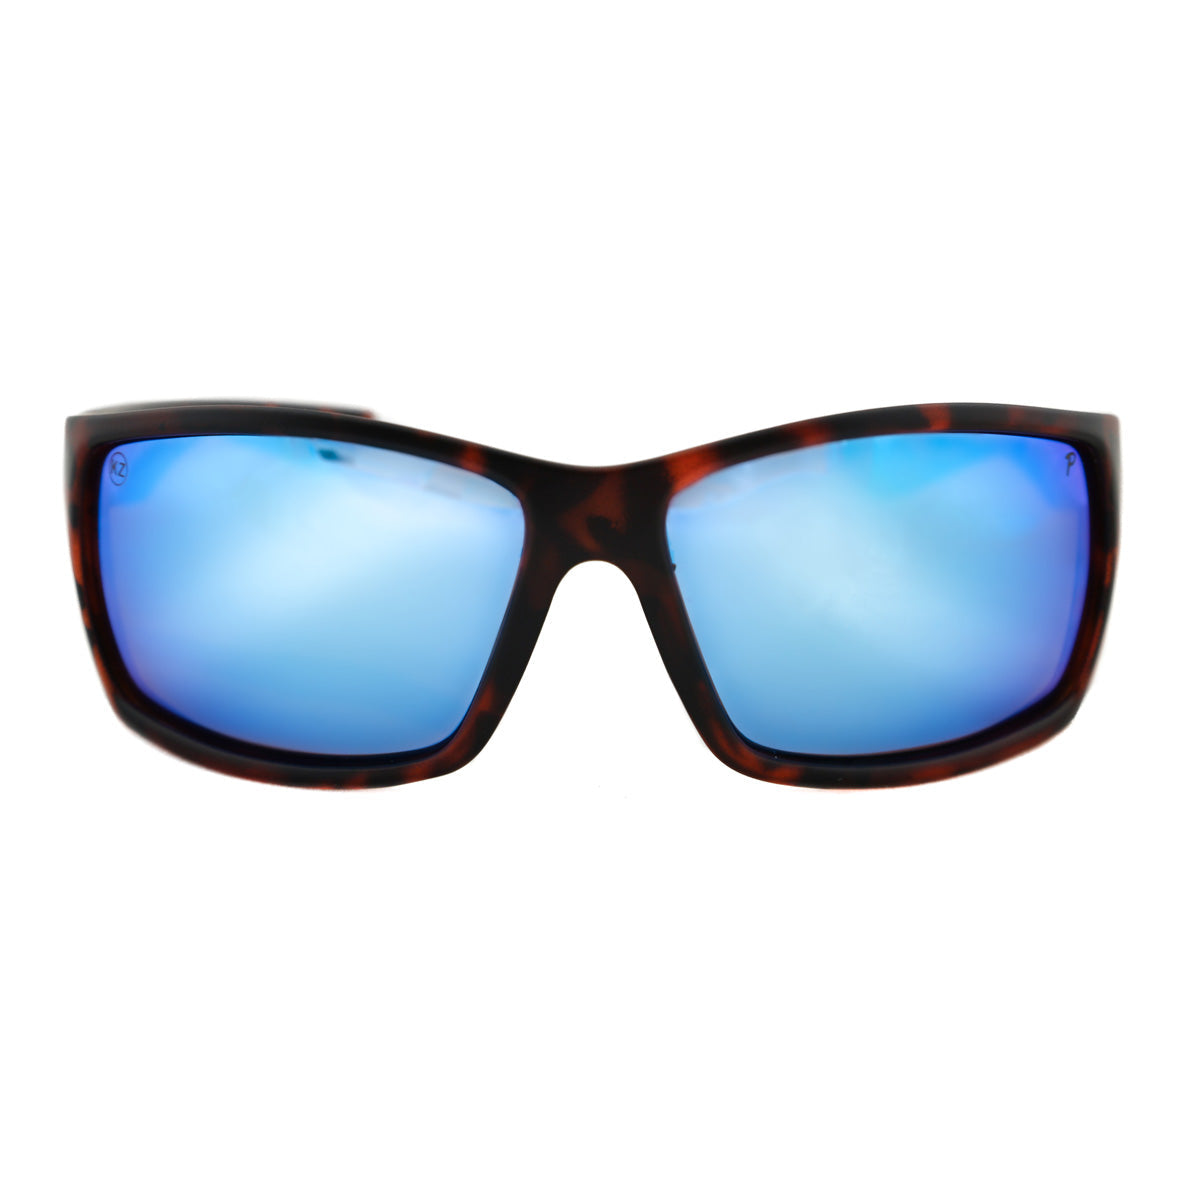 Sierra - Floating Sunglasses KZ Tortoise / Sky Blue Mirror